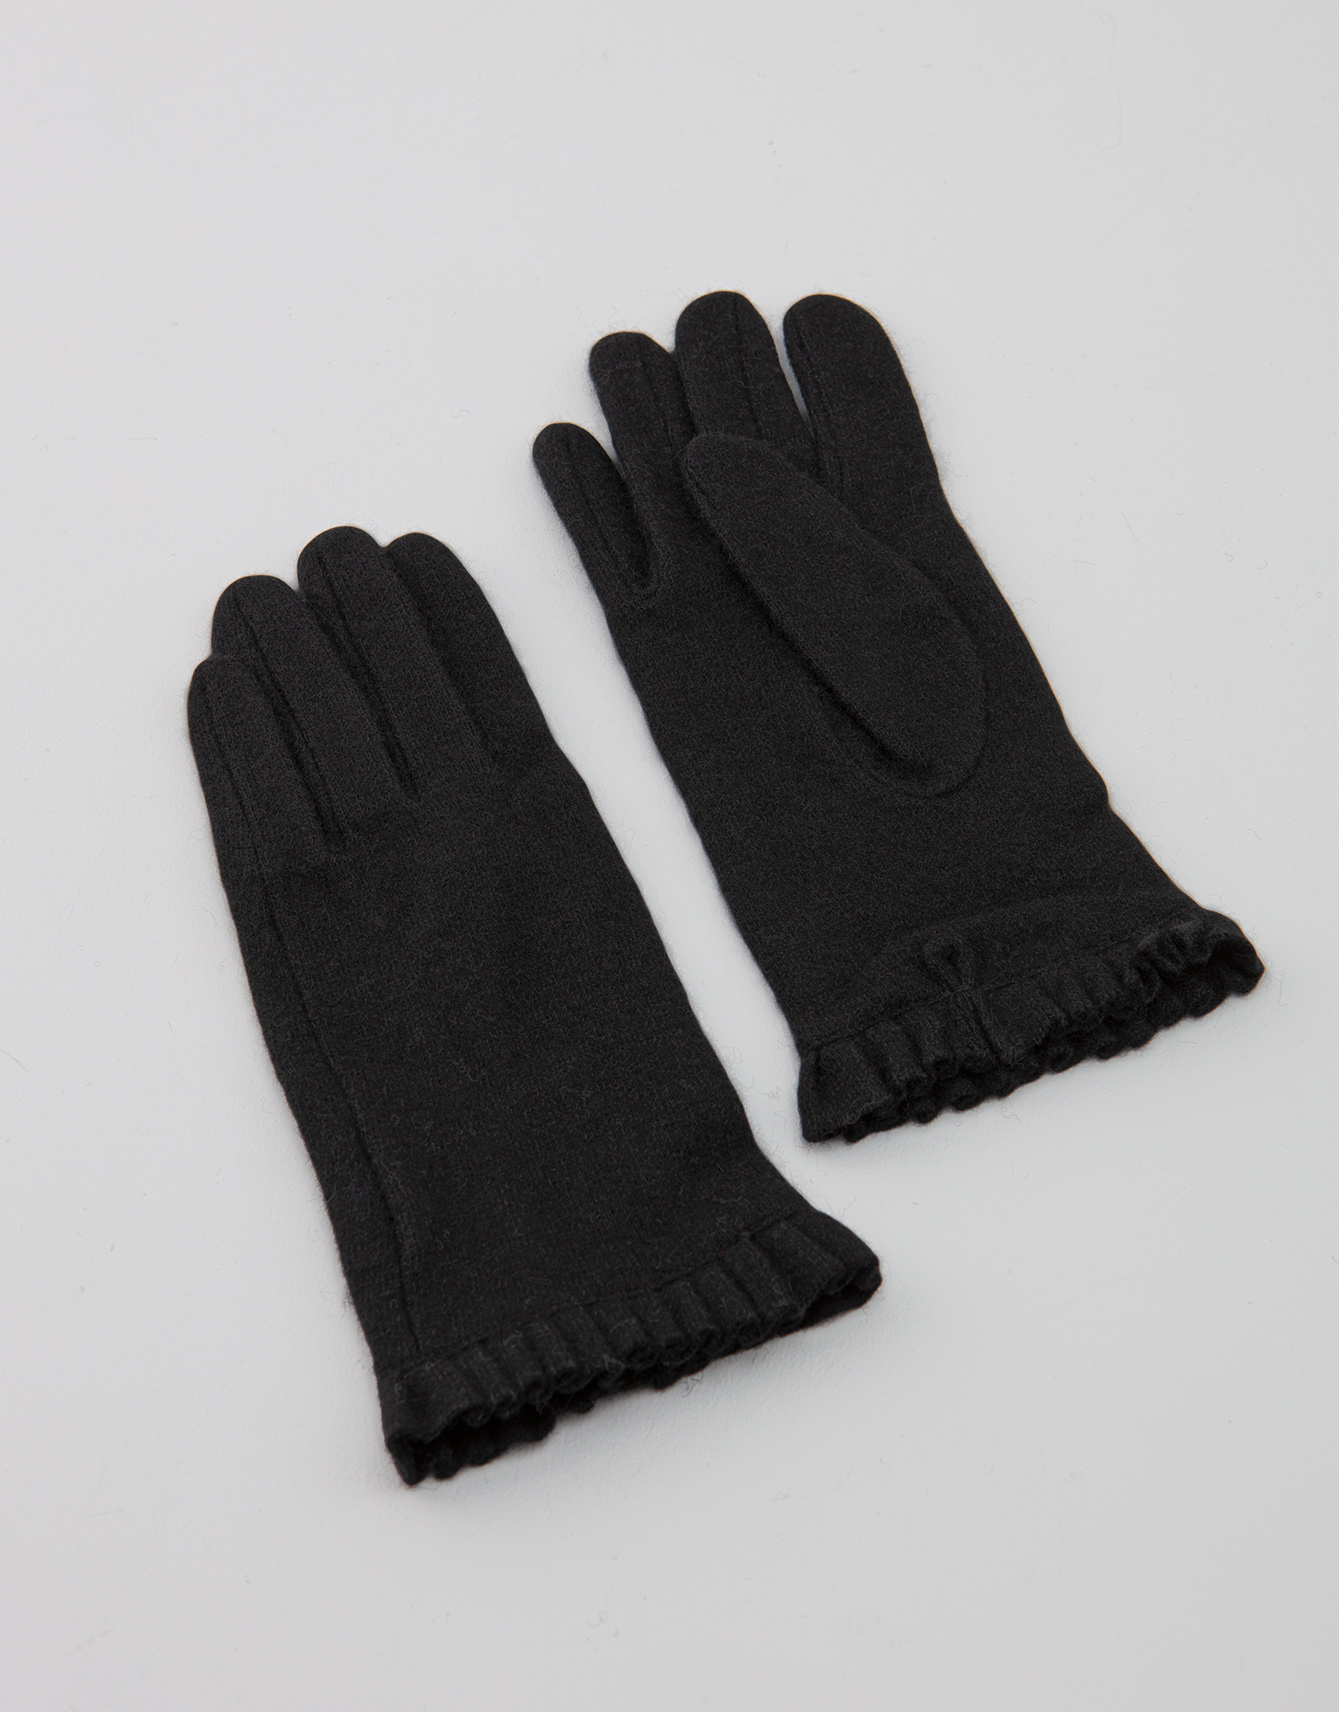 Wool mix gloves